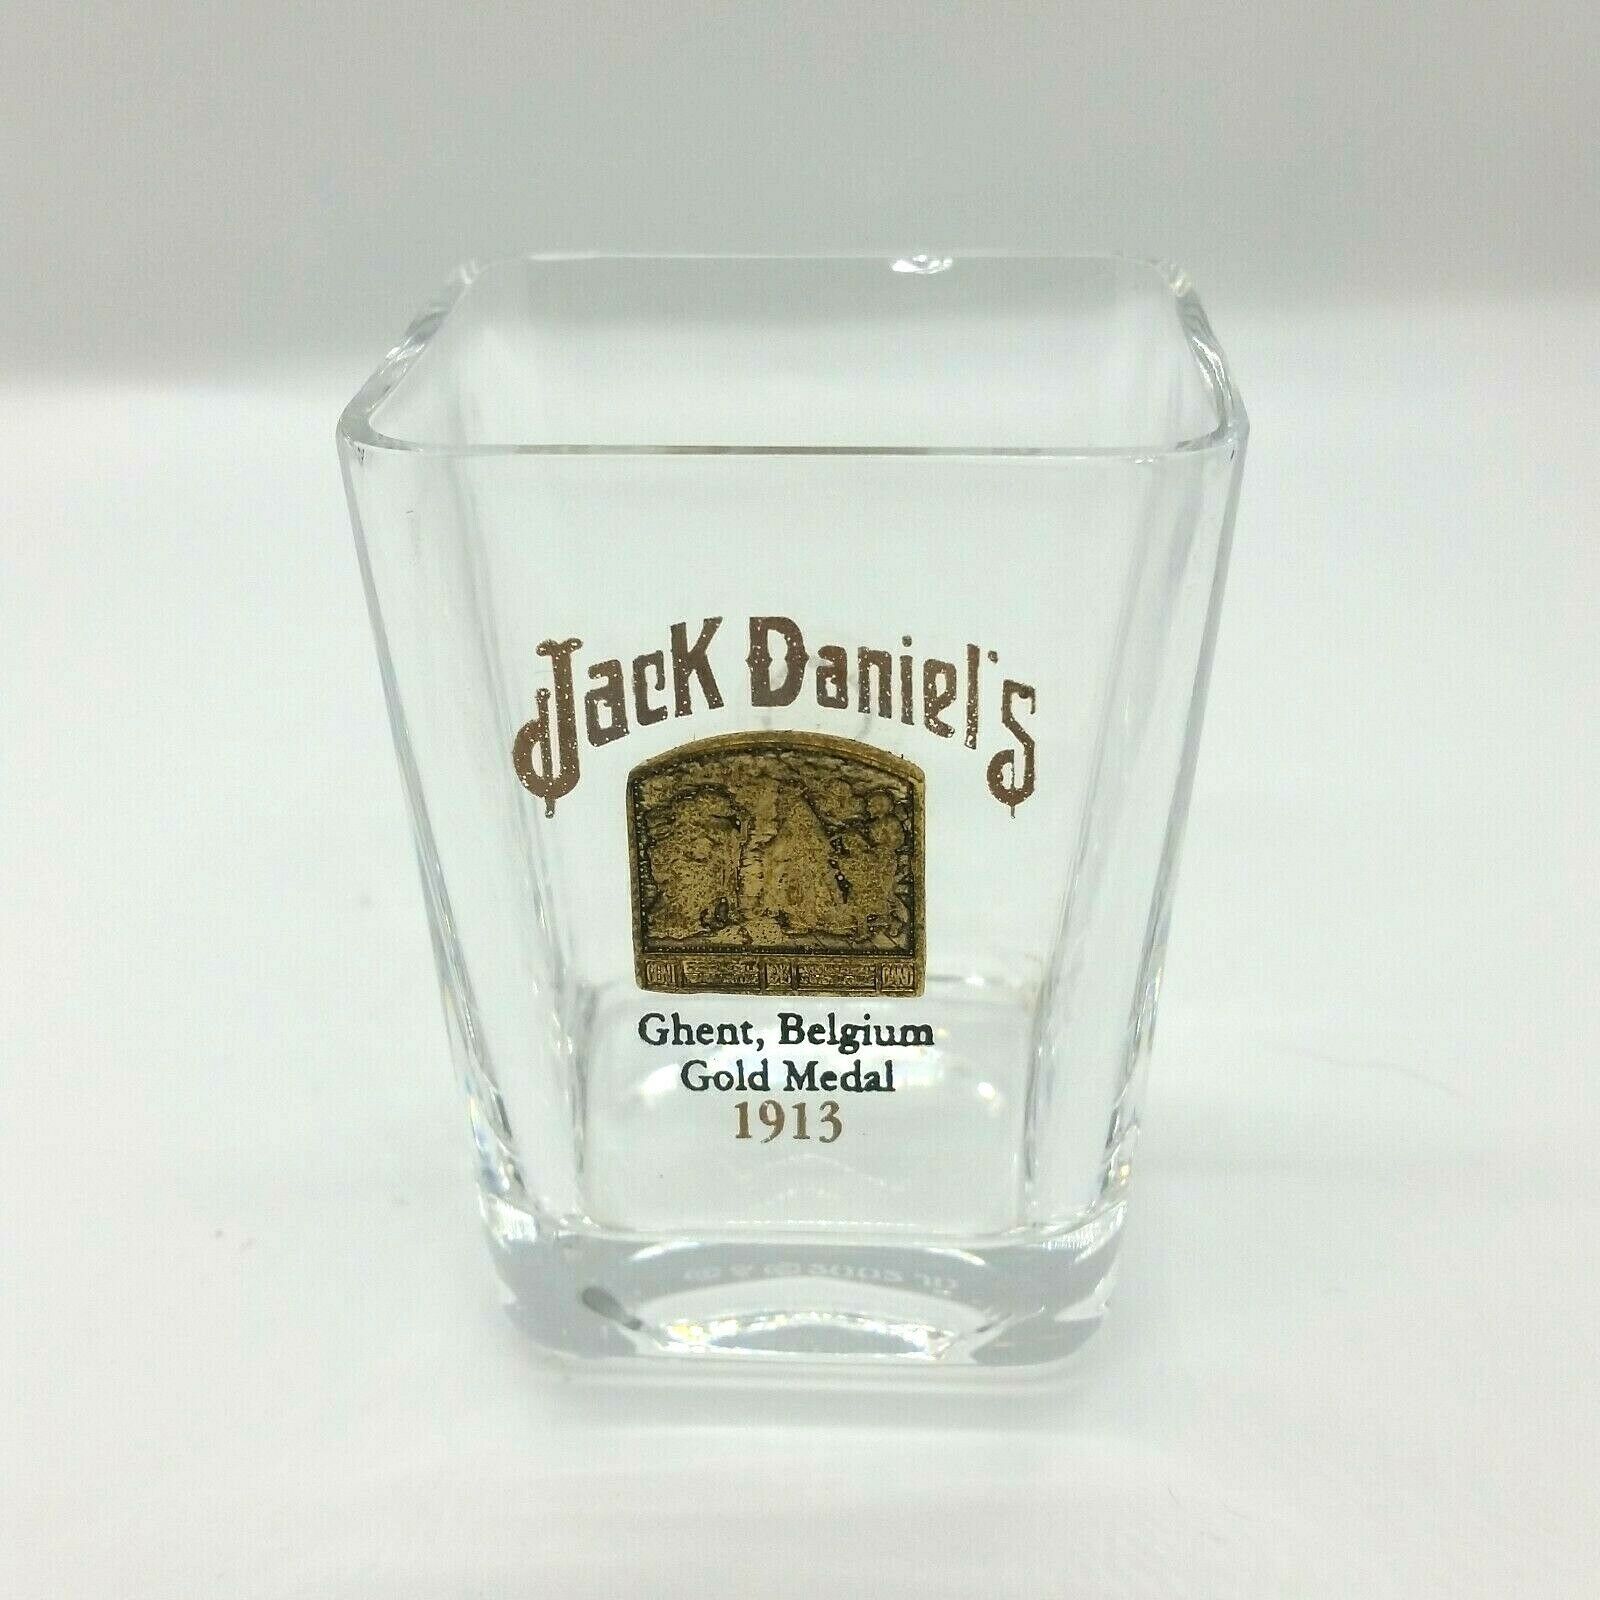 Jack Daniels Legends Square Shot Glass 1913 Ghent Belgium Gold Medal Collectable - $19.32